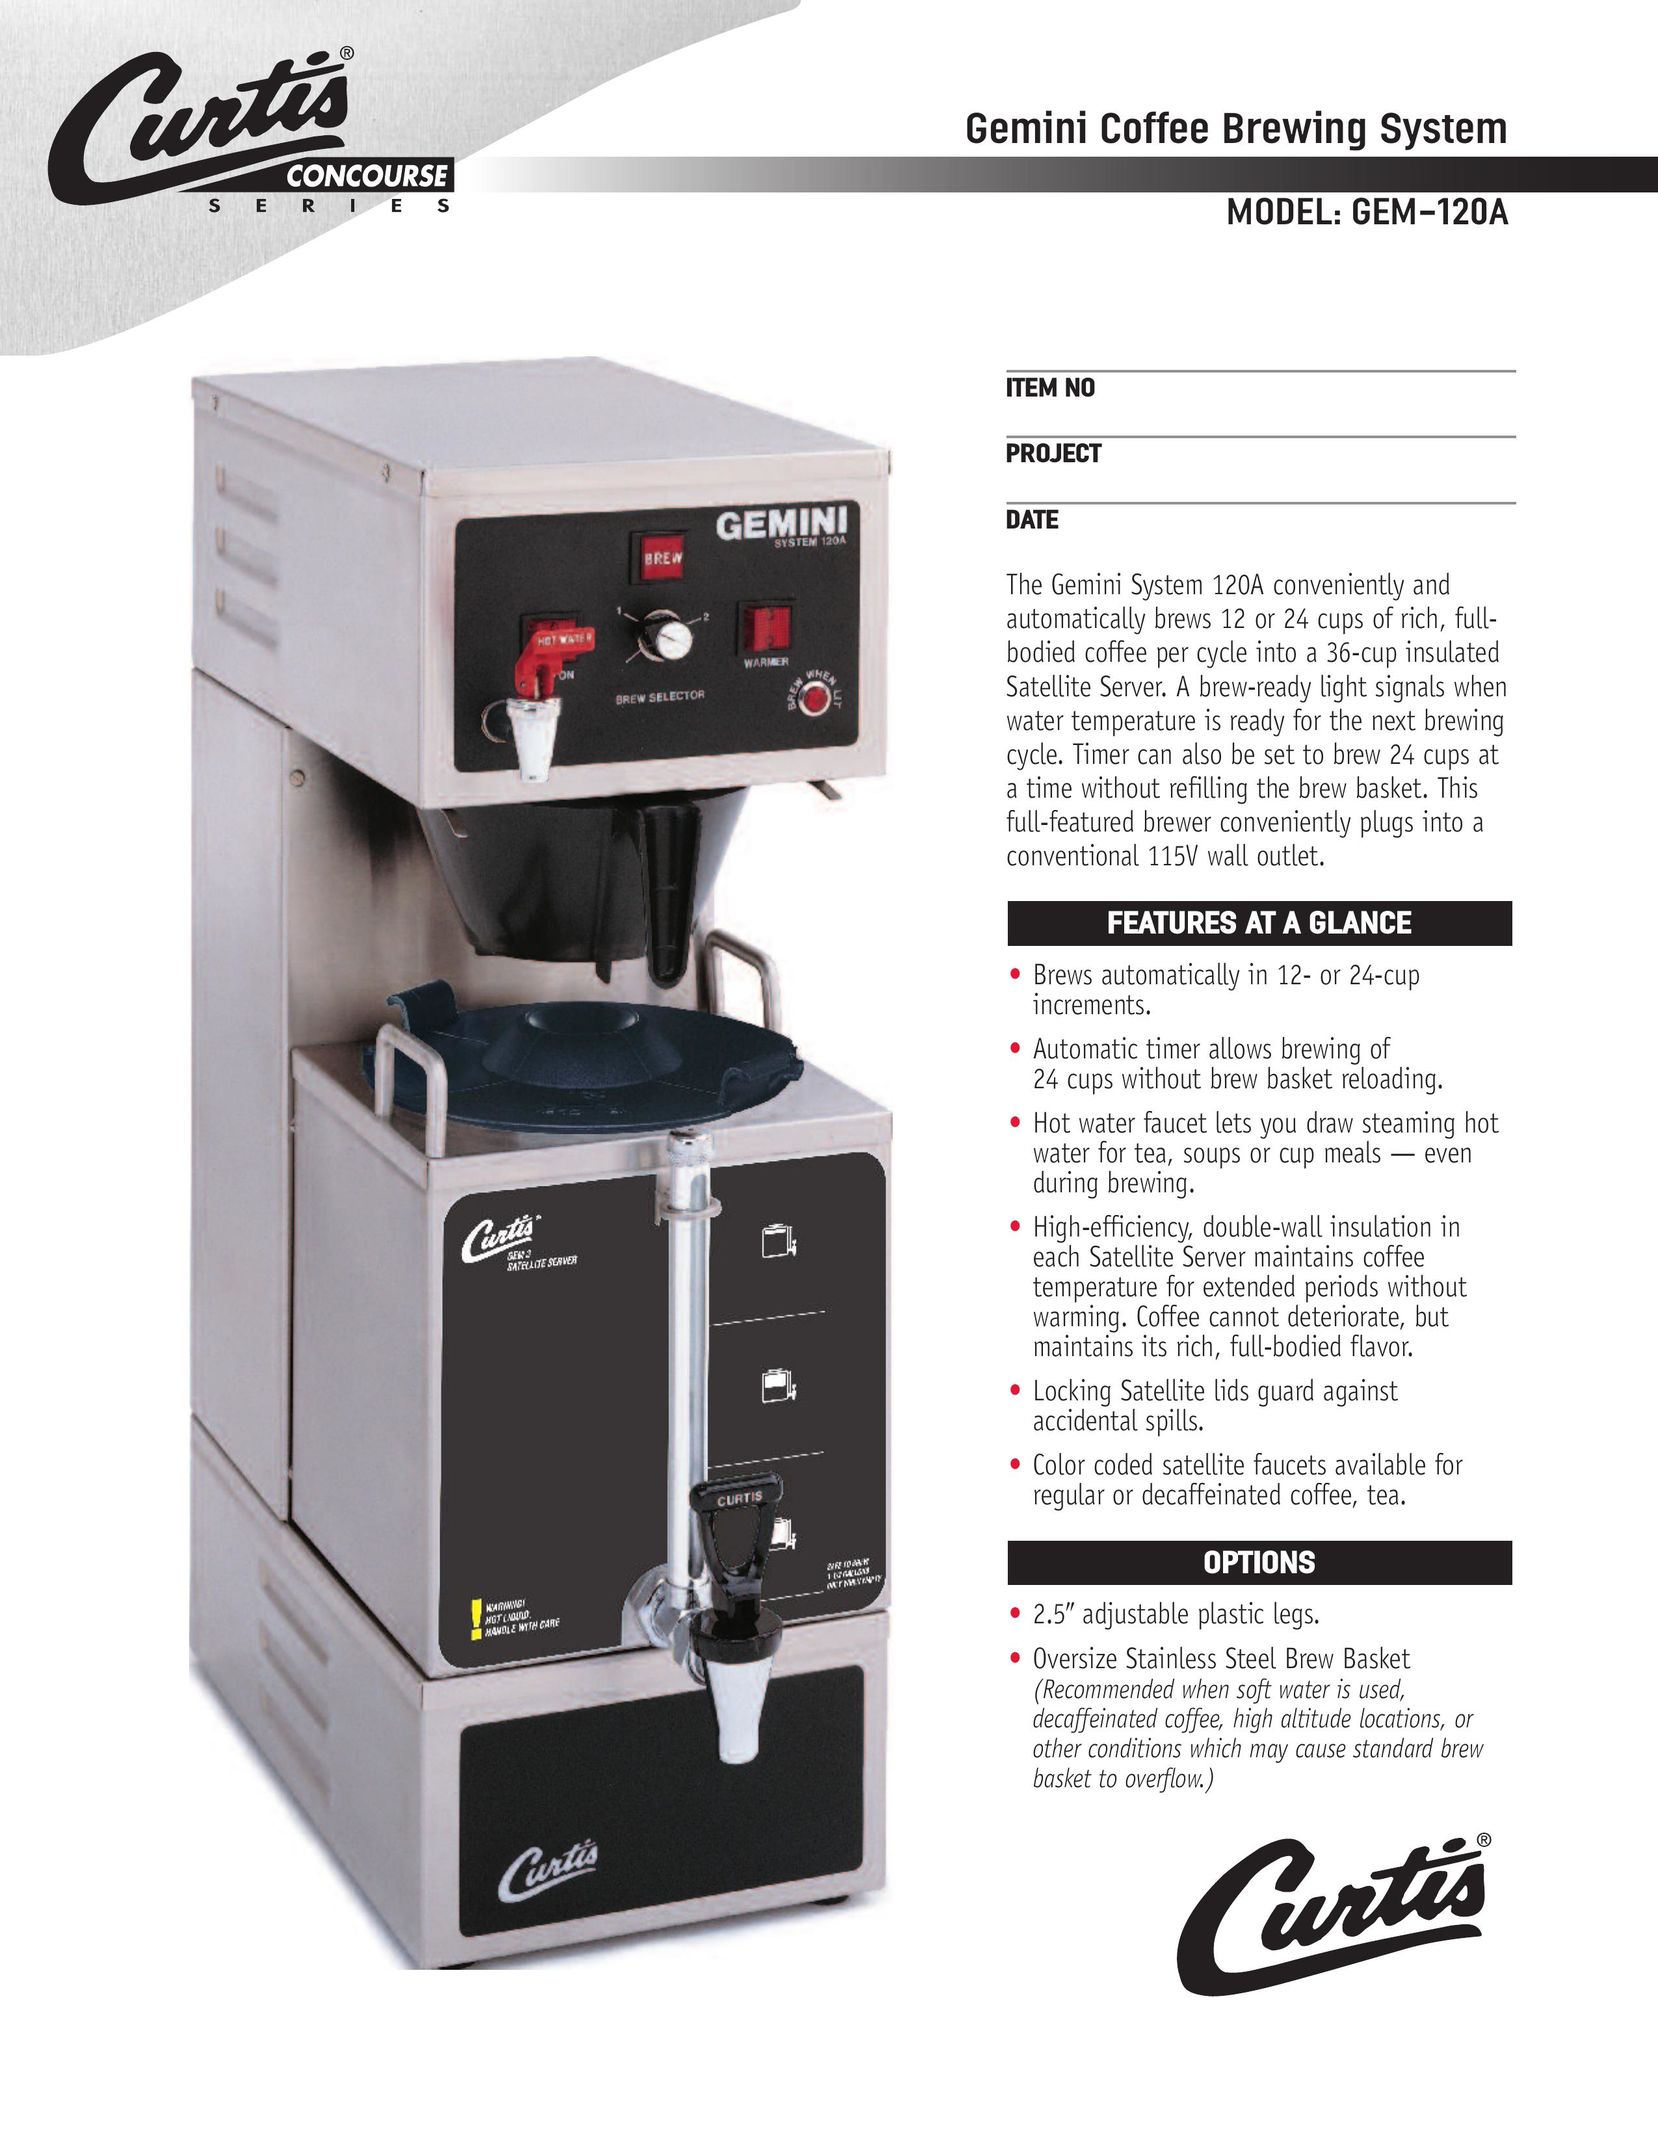 Wibur Curtis Company GEM-120A Coffeemaker User Manual